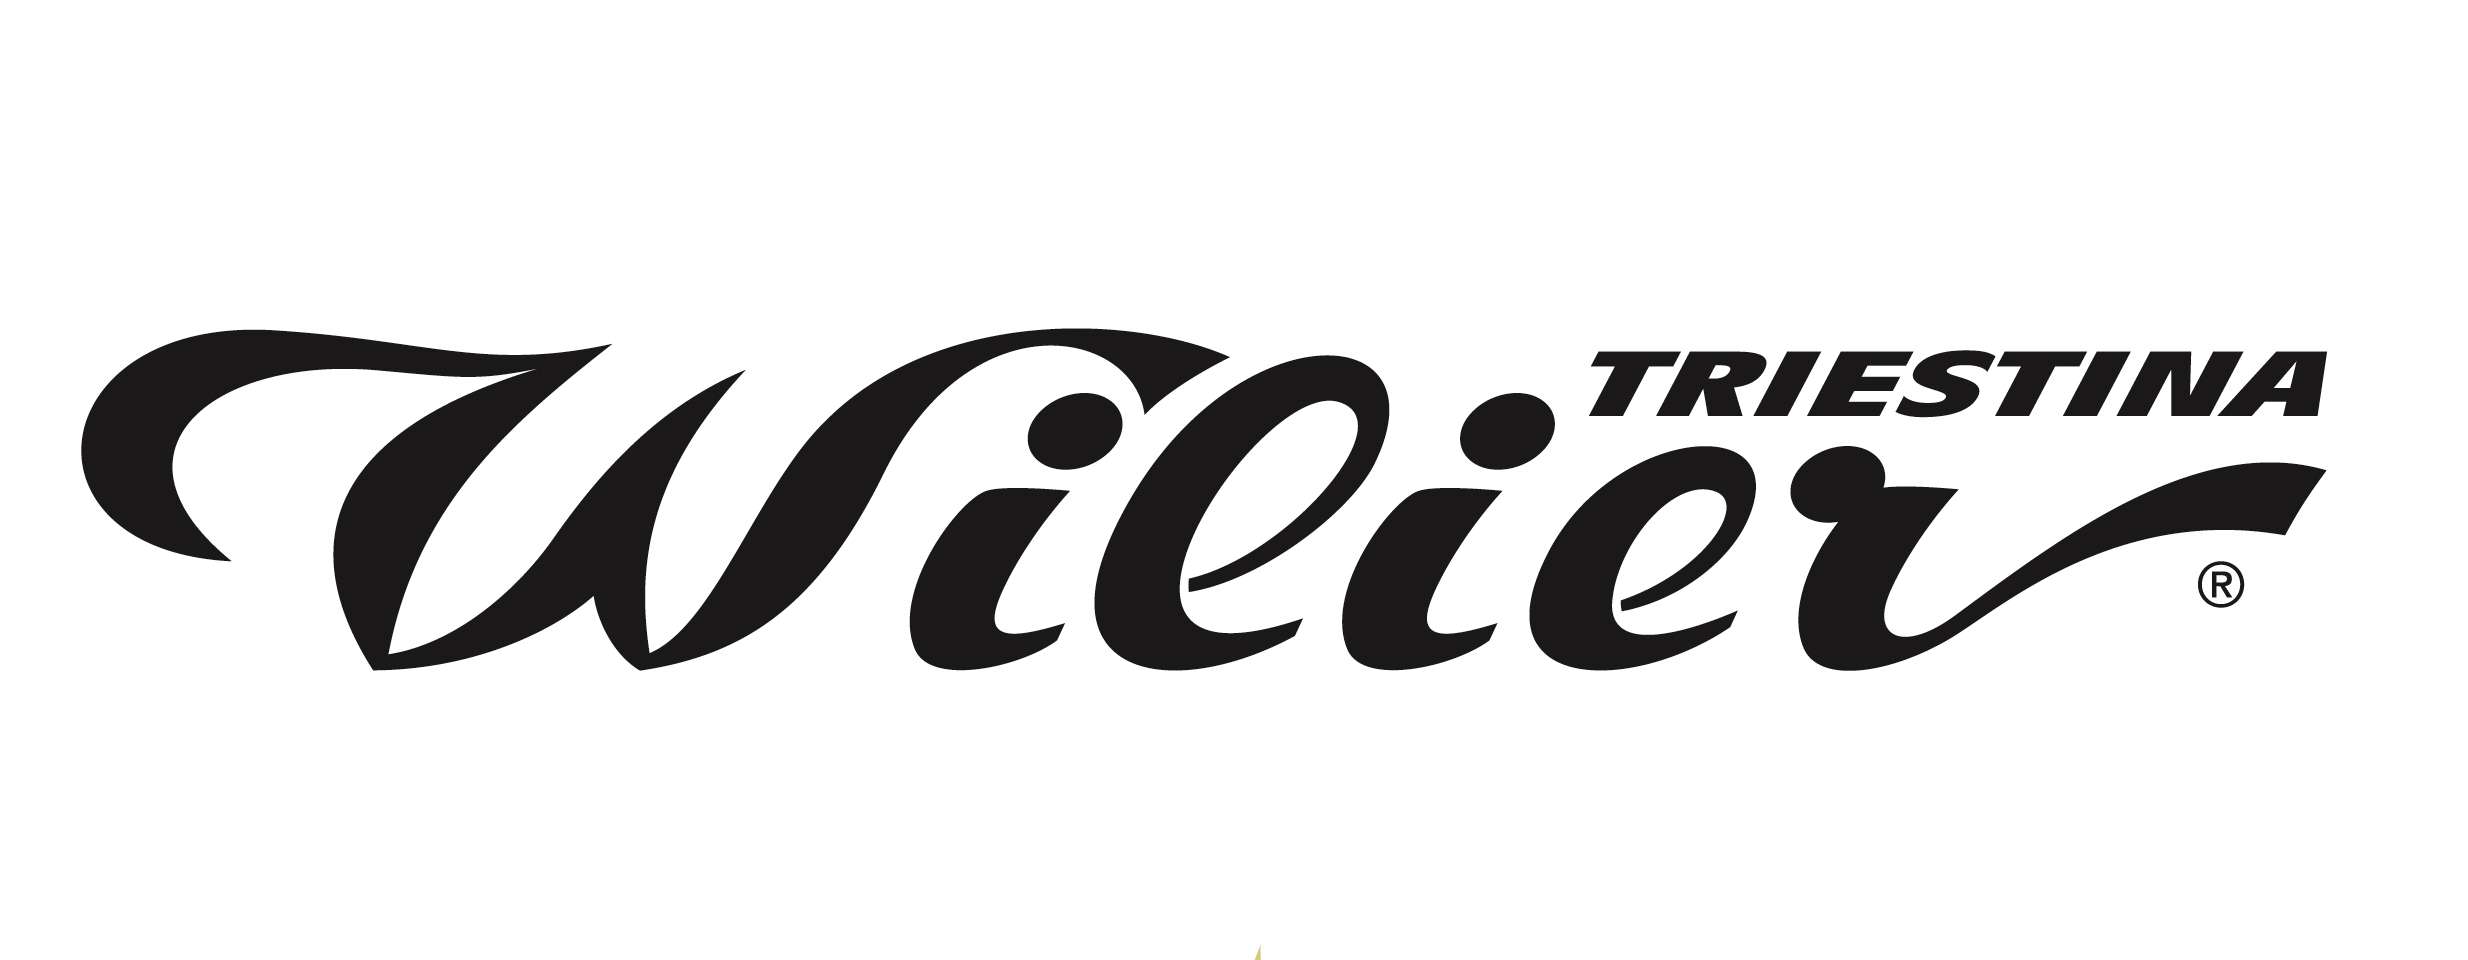 Bicycle Company Logo - Bike company names and Logos – Origins, history, explanation. – Sicycle